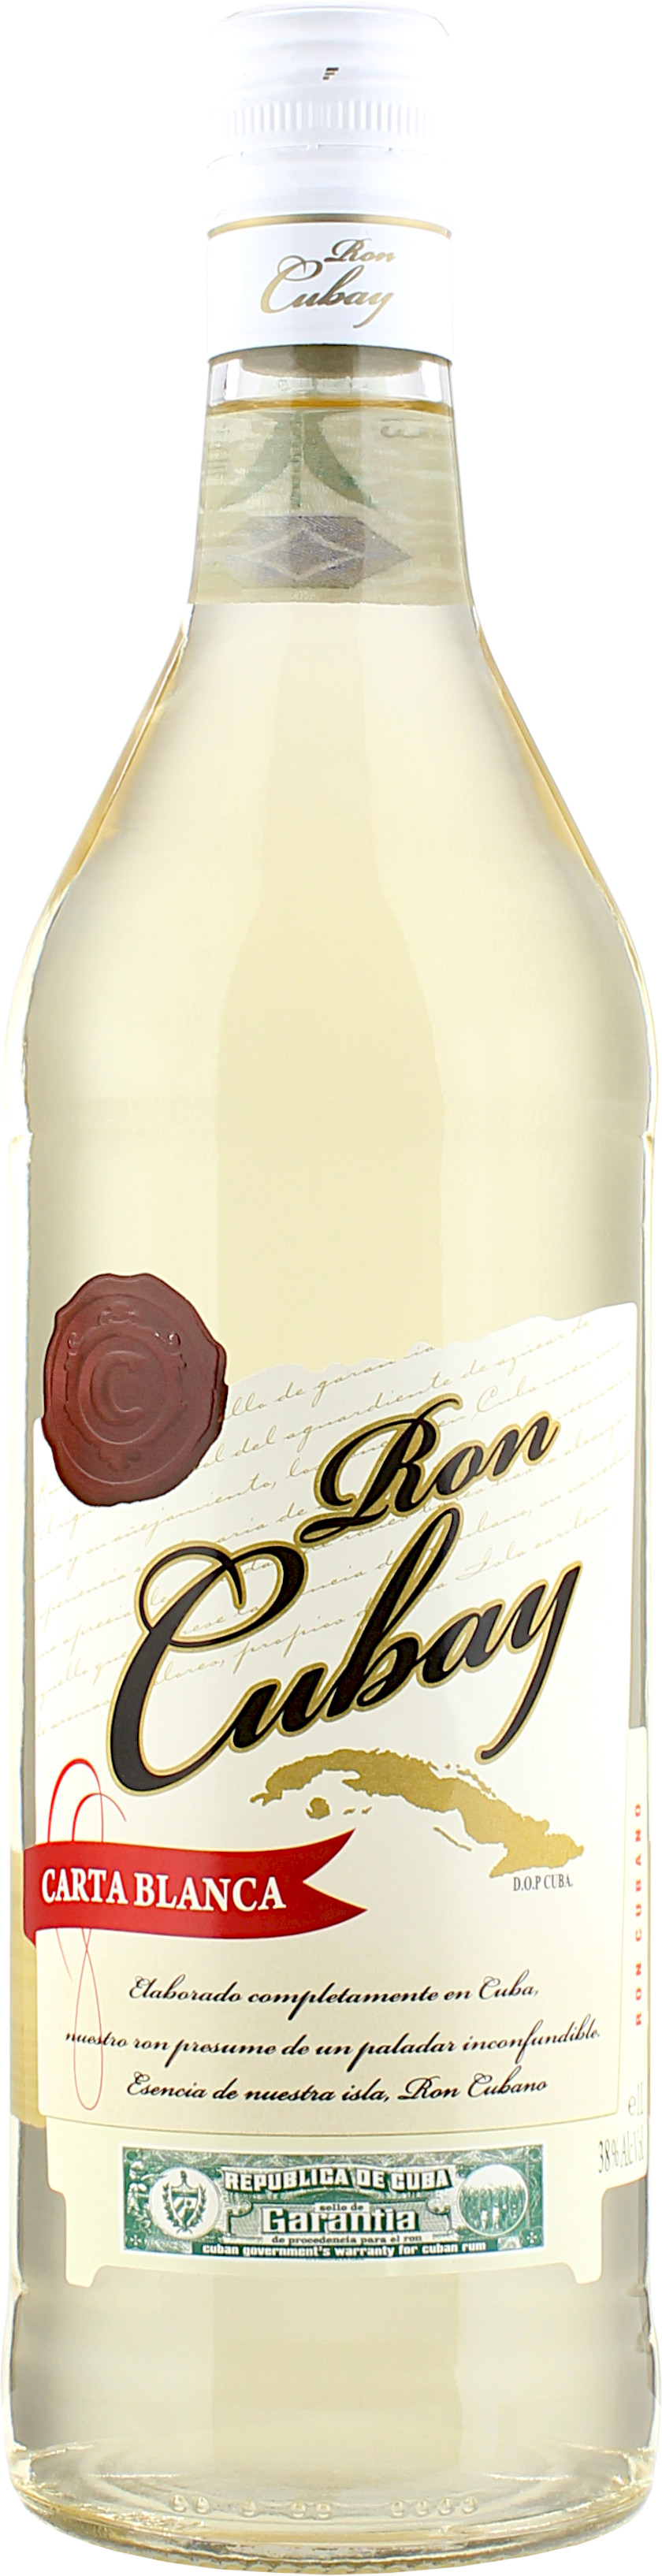 Ron Cubay Carta Blanca 38.0% 1 Liter